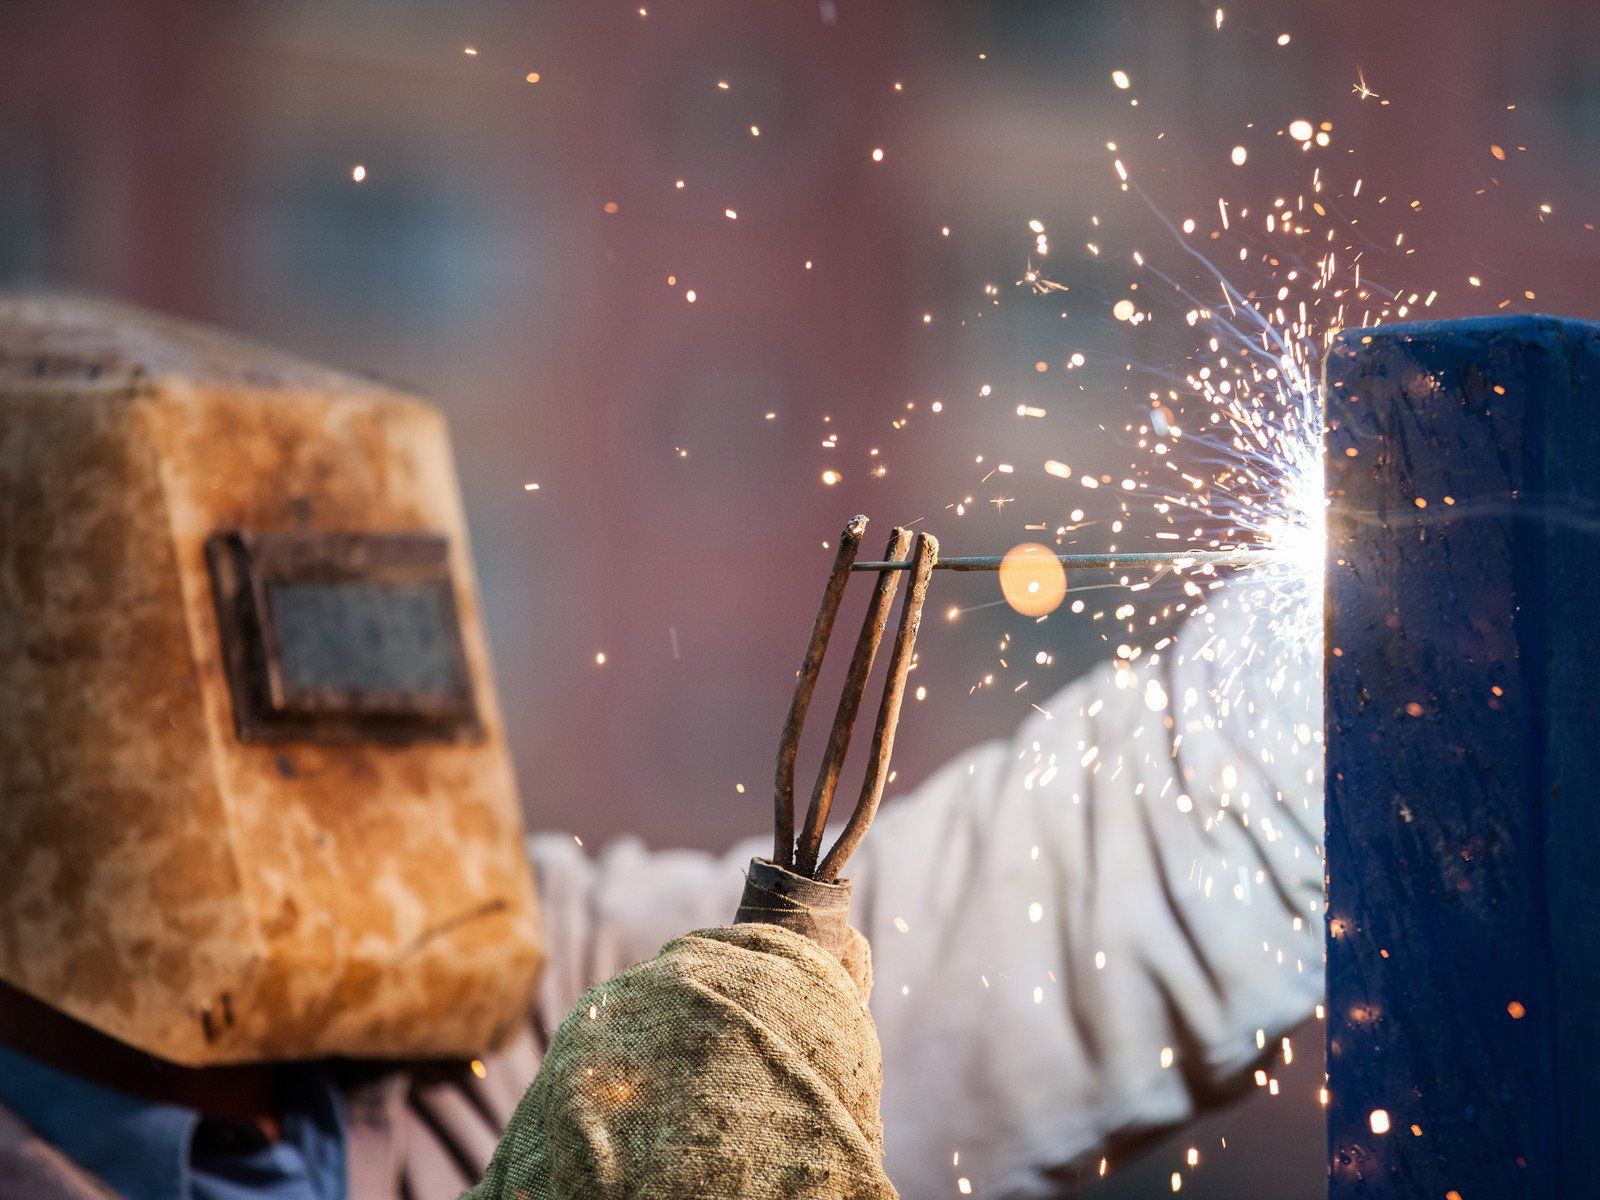 worker using the welding machine in the metal